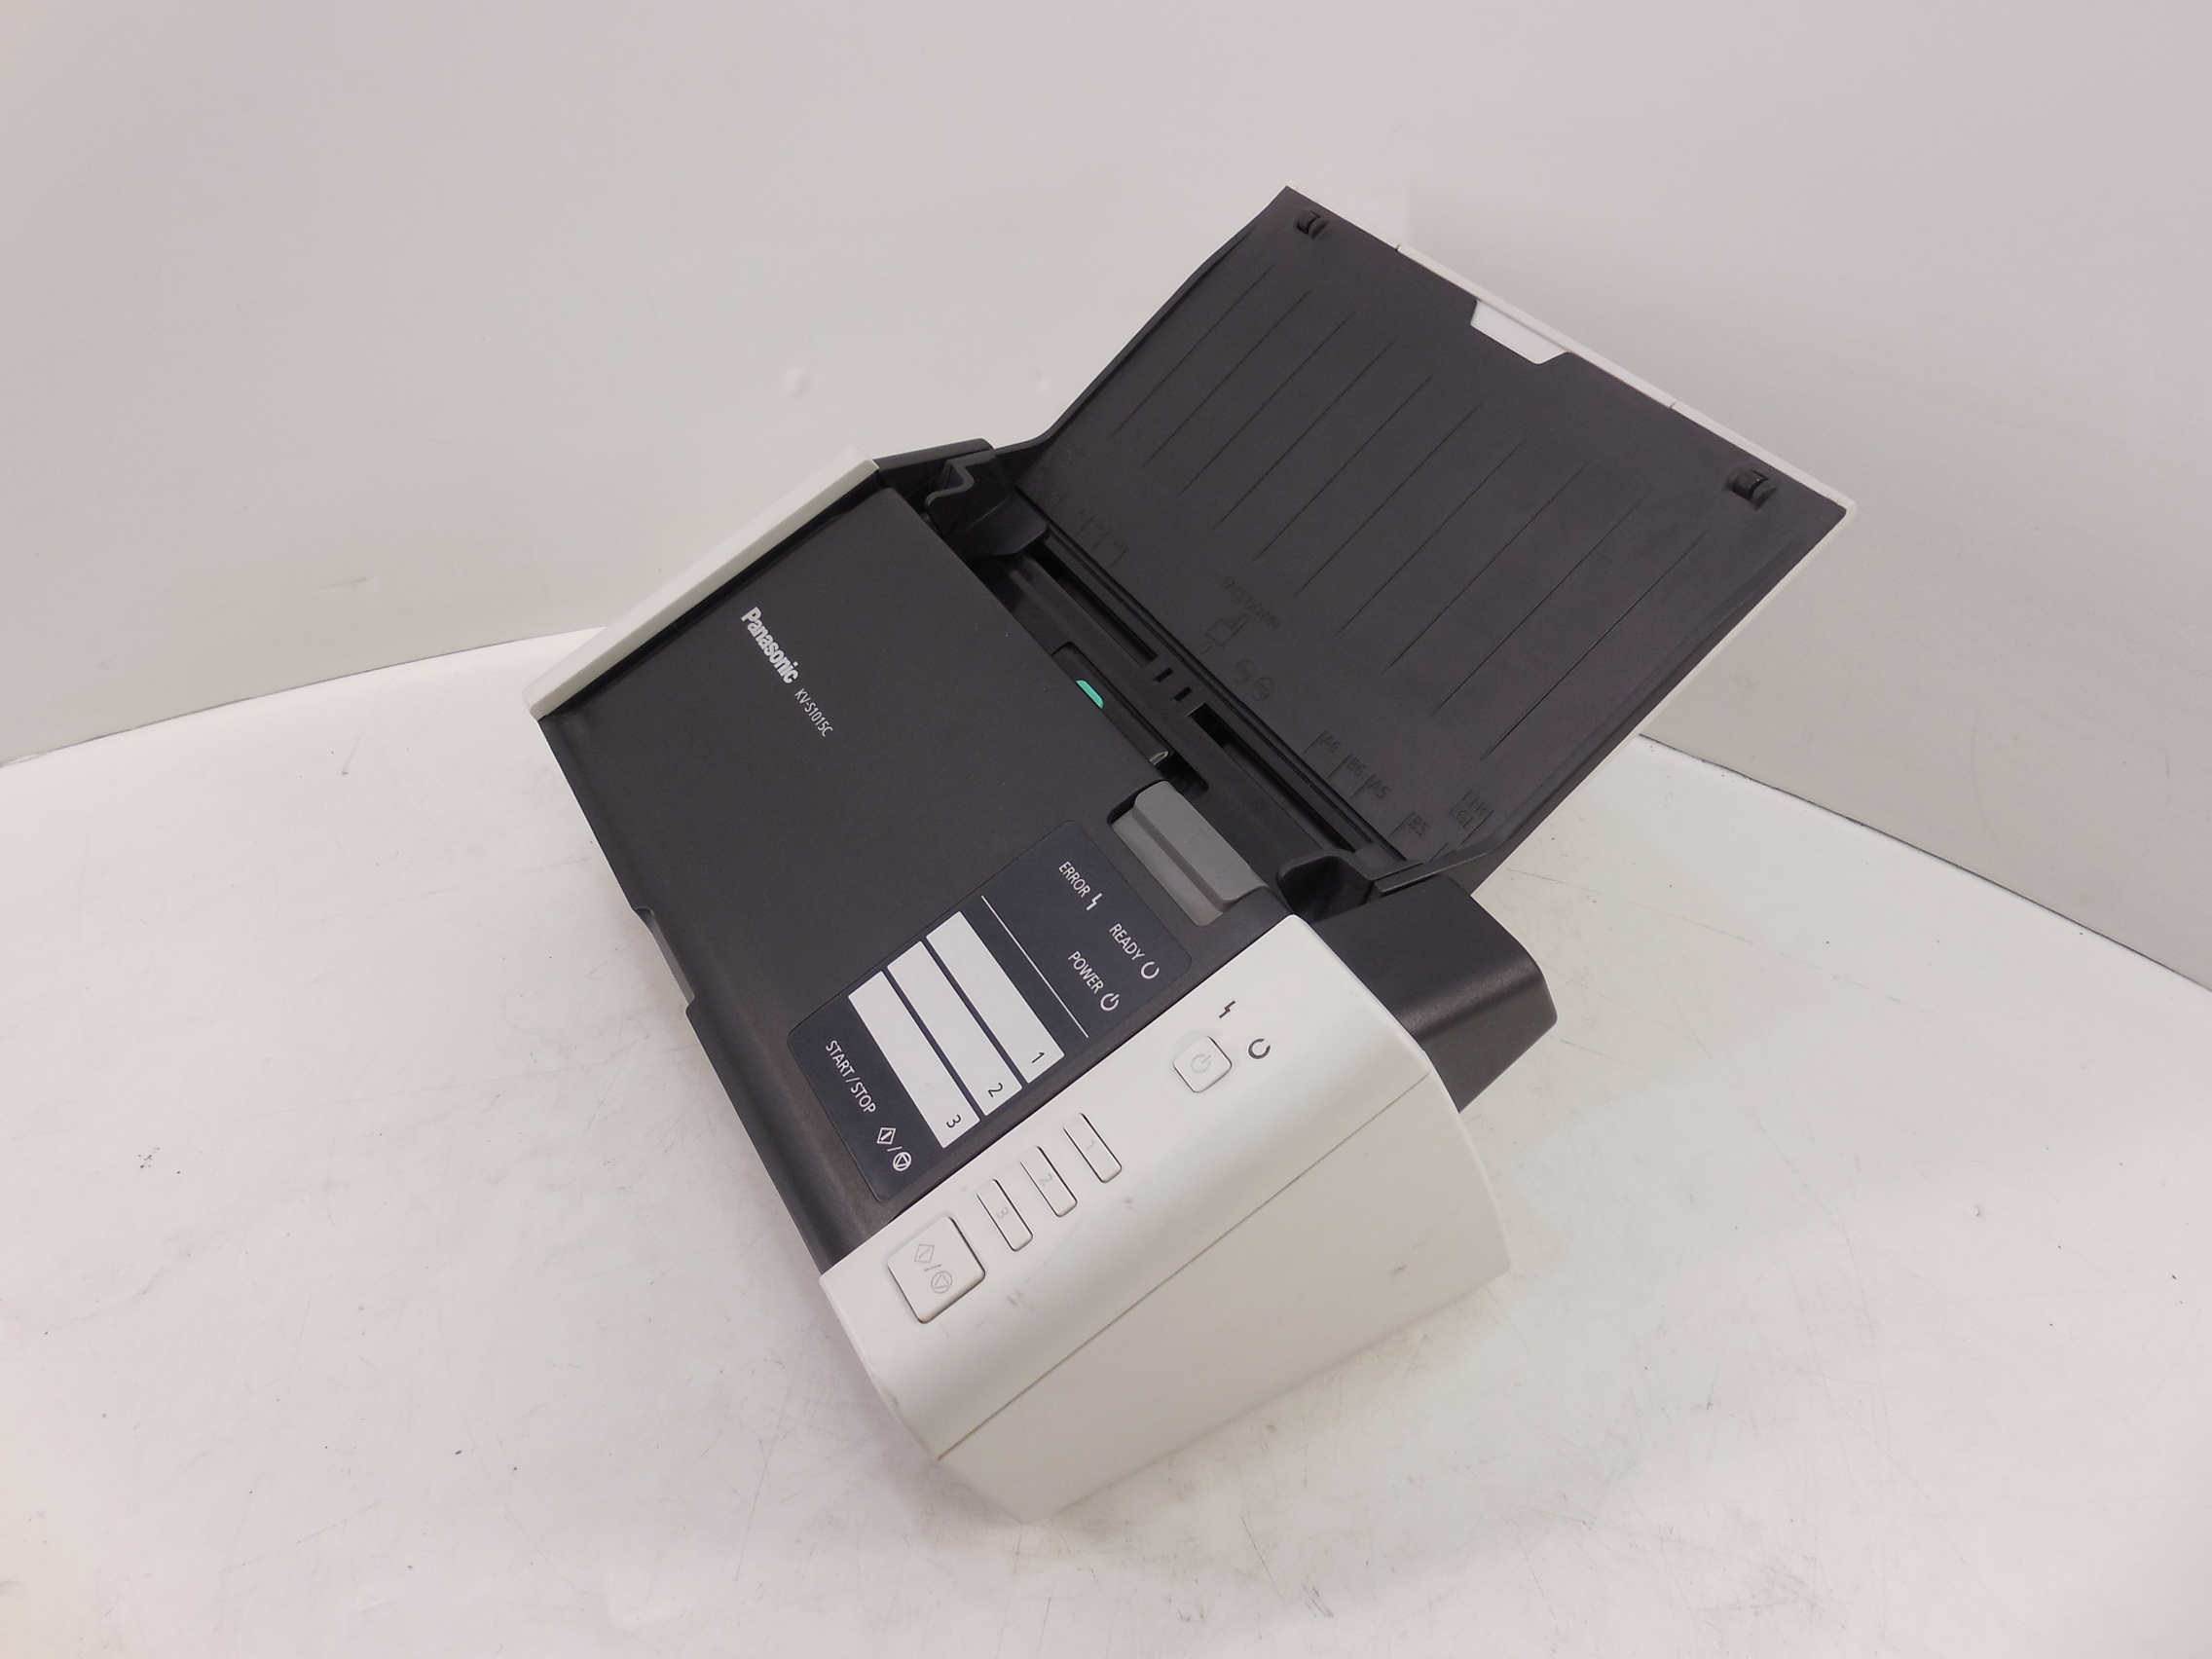 Panasonic scanners: simplifying document management